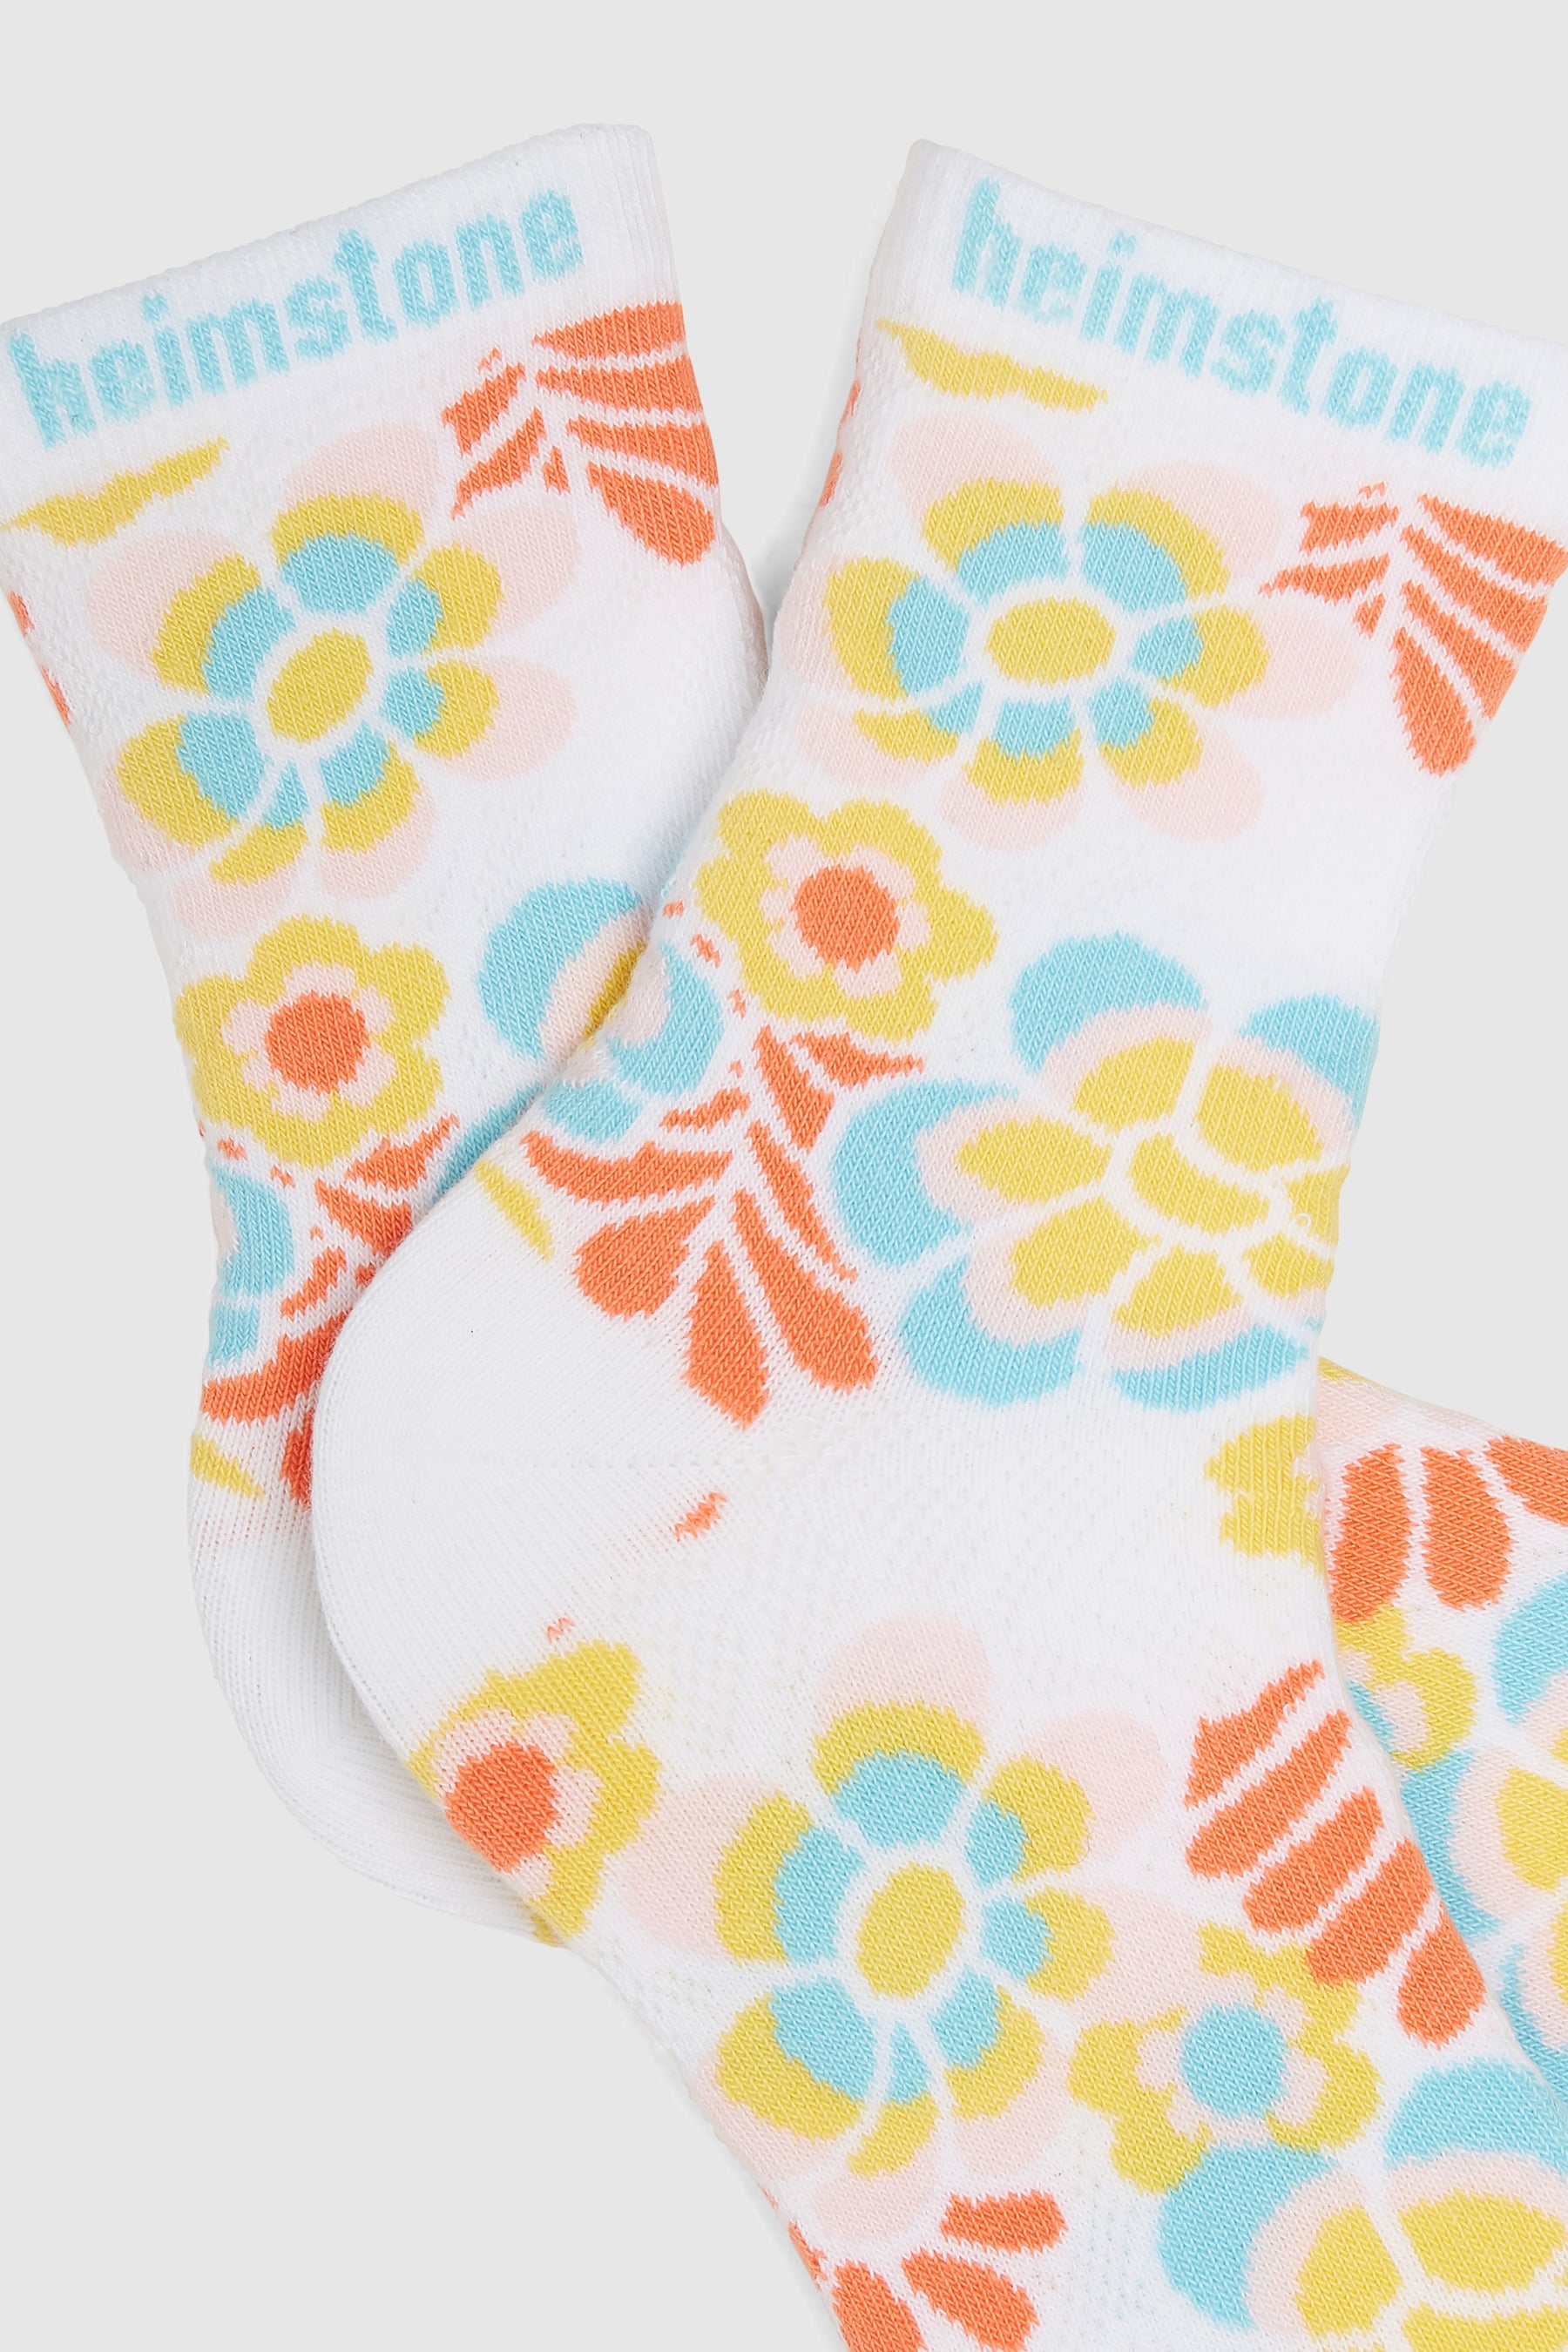 Ankle socks in Flower Power print